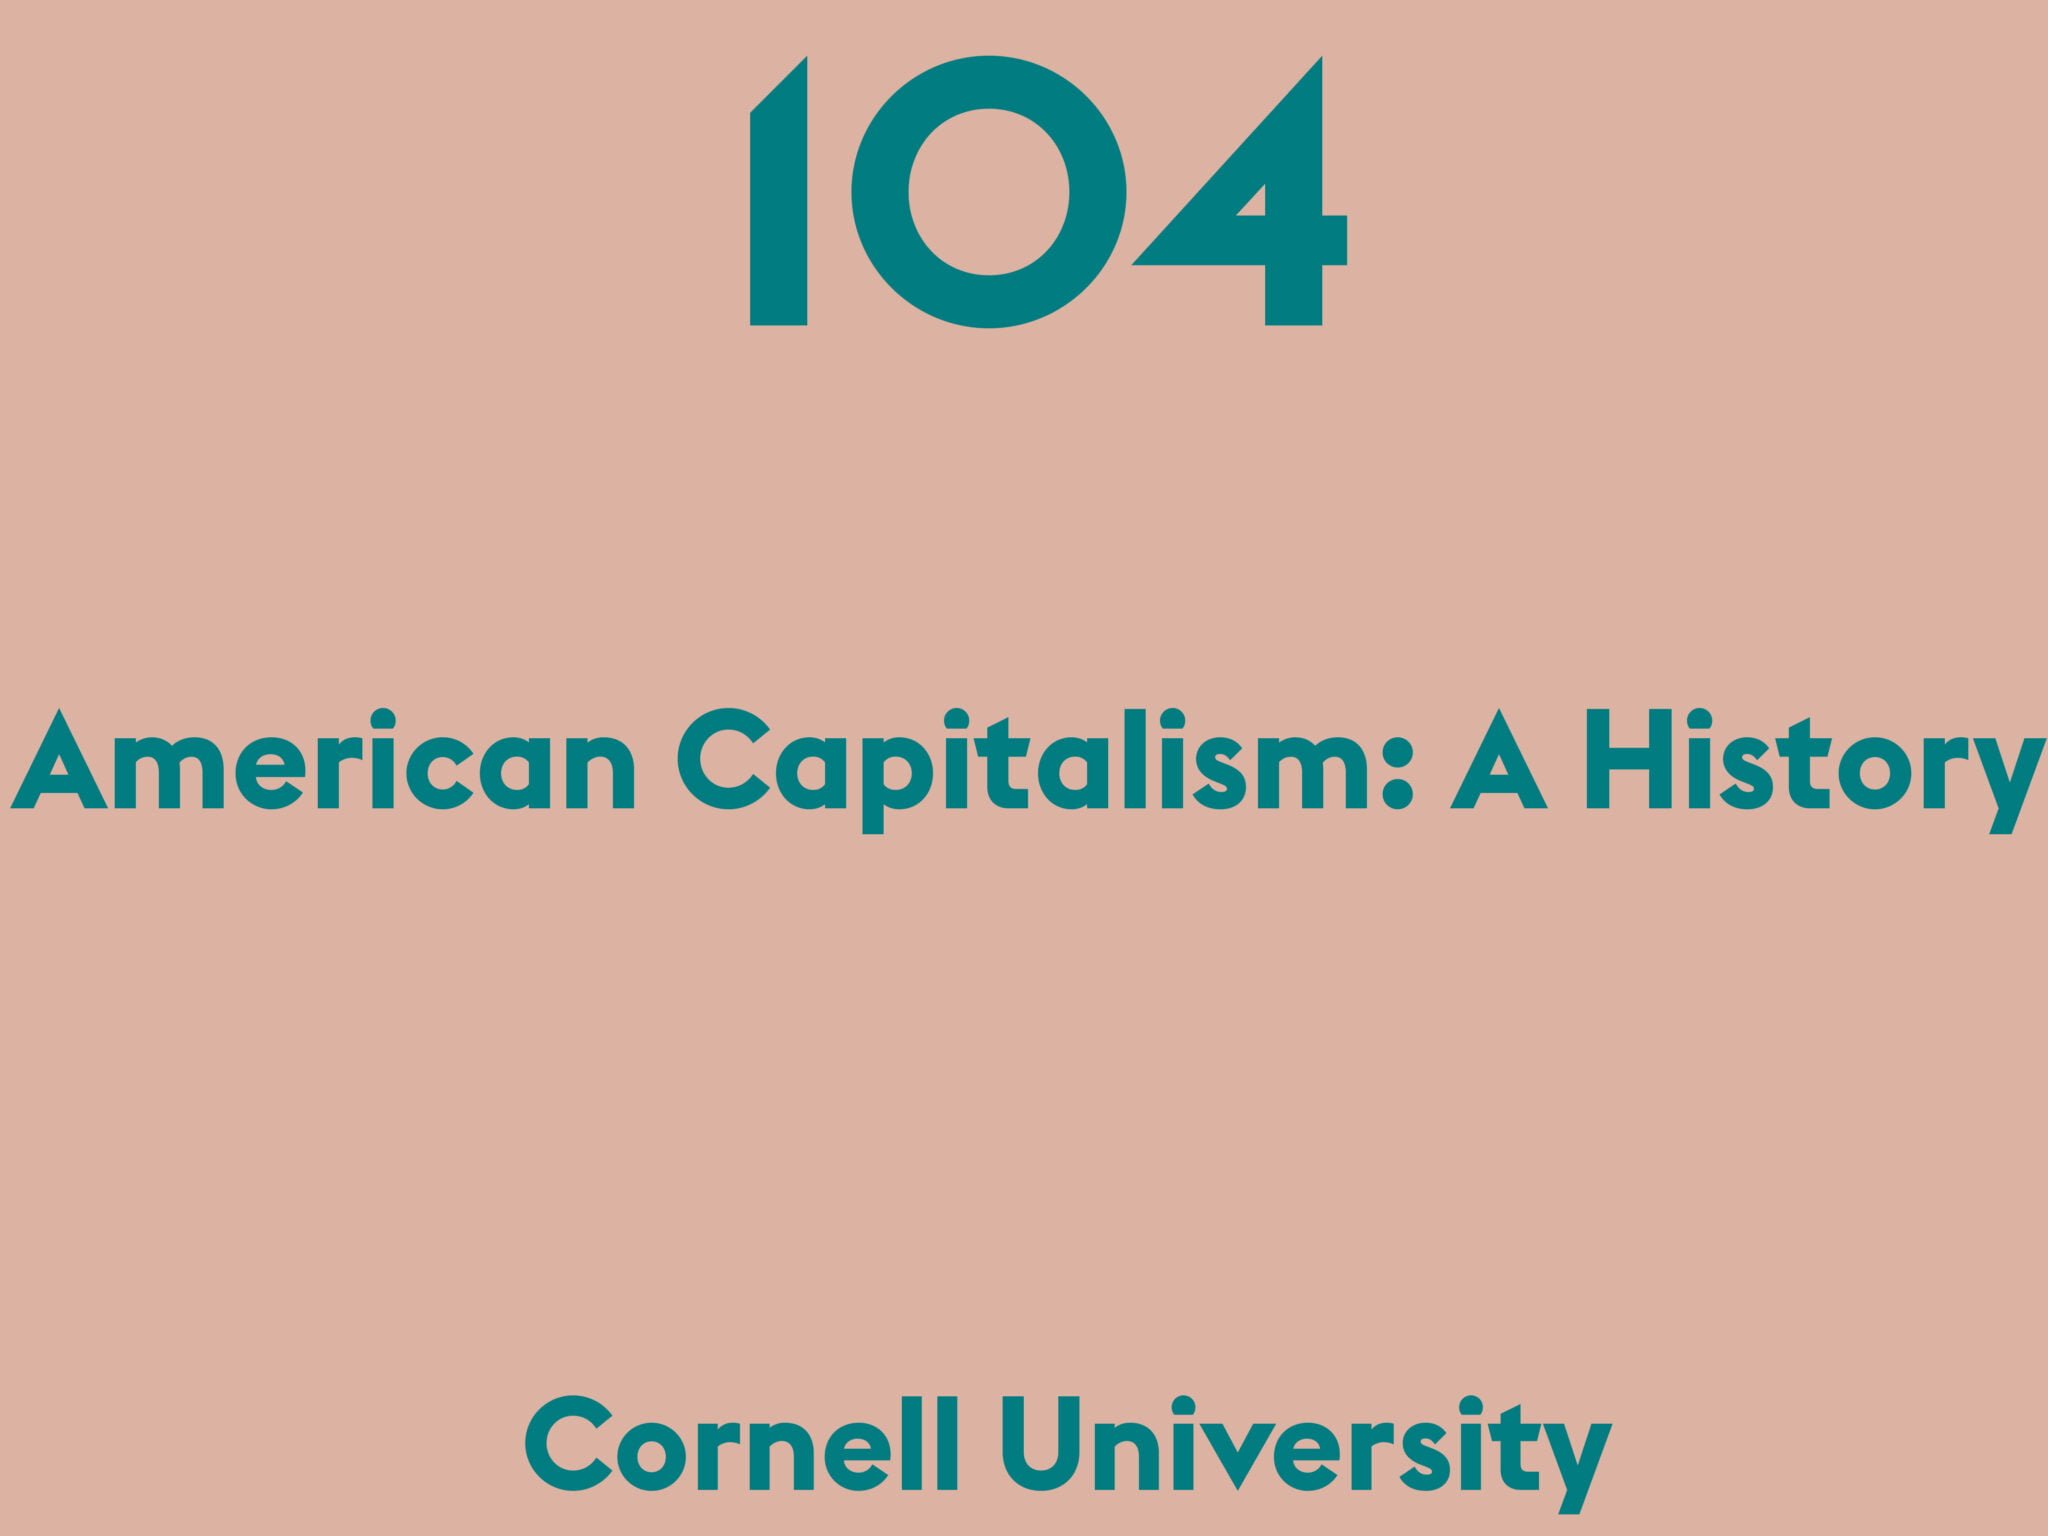 American Capitalism: A History